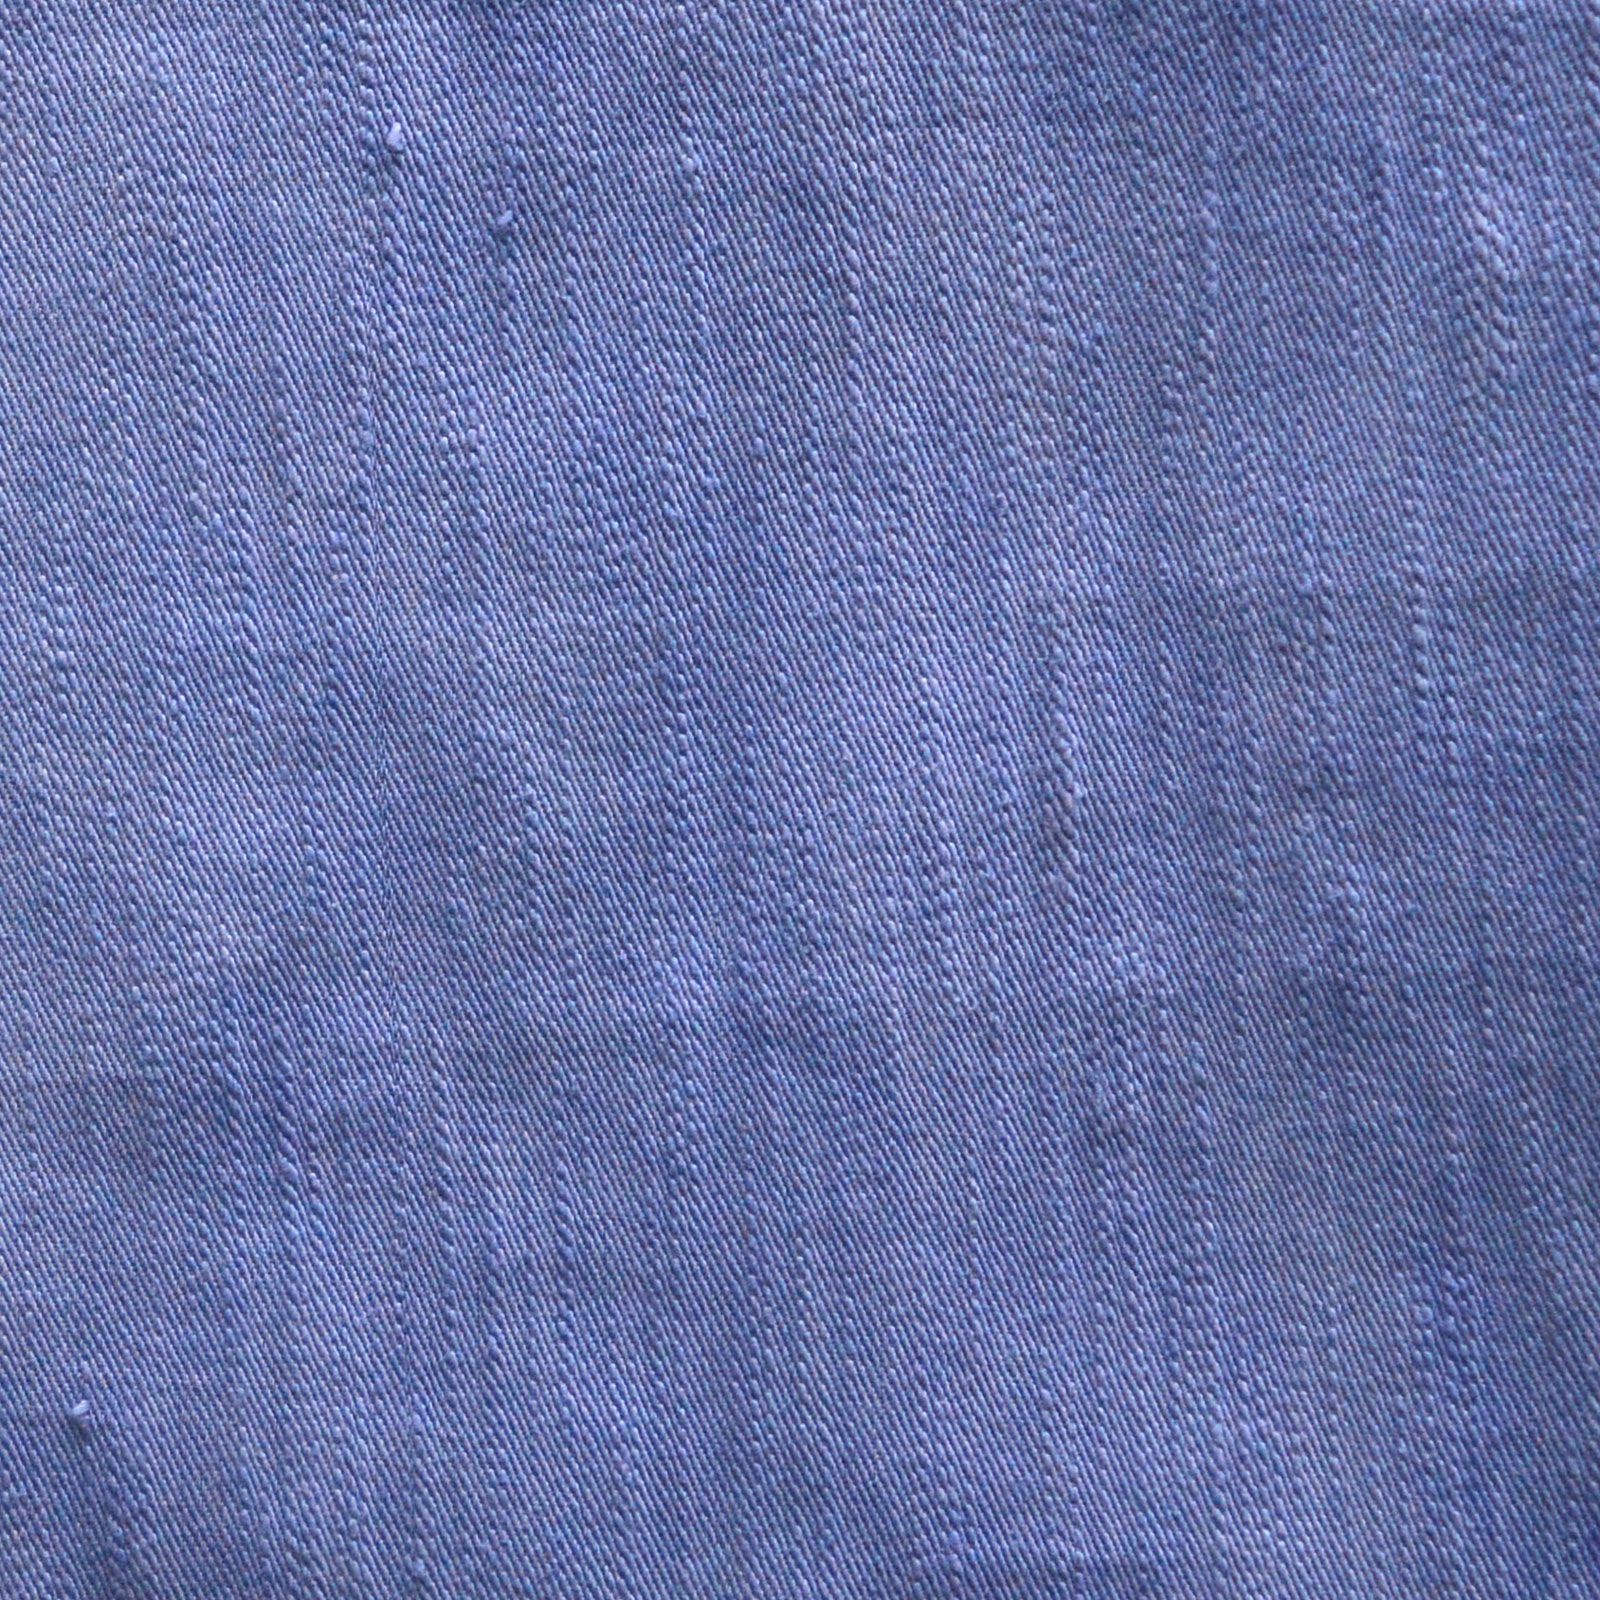 Medium Weight Khadi Selvedge Denim - Fabric Dyed - 10x10 - Carolina Blue - Natural indigo